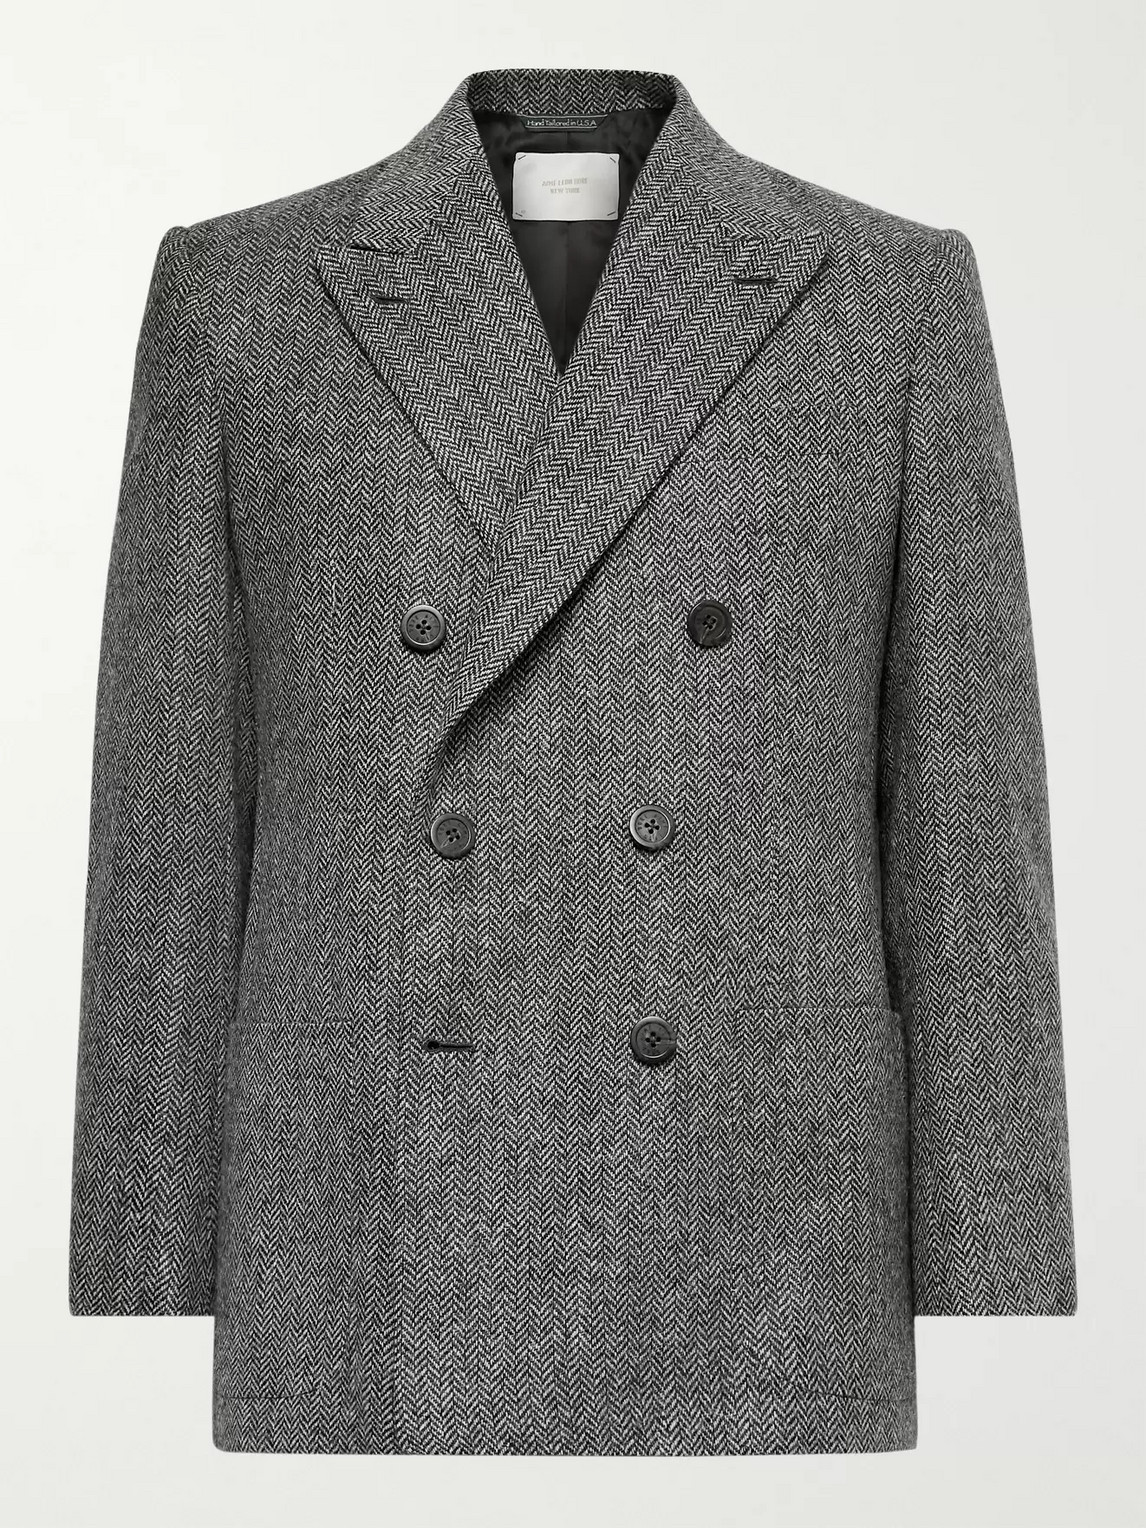 Aimé Leon Dore Martin Greenfield Double-breasted Herringbone Wool Suit Jacket In Grey